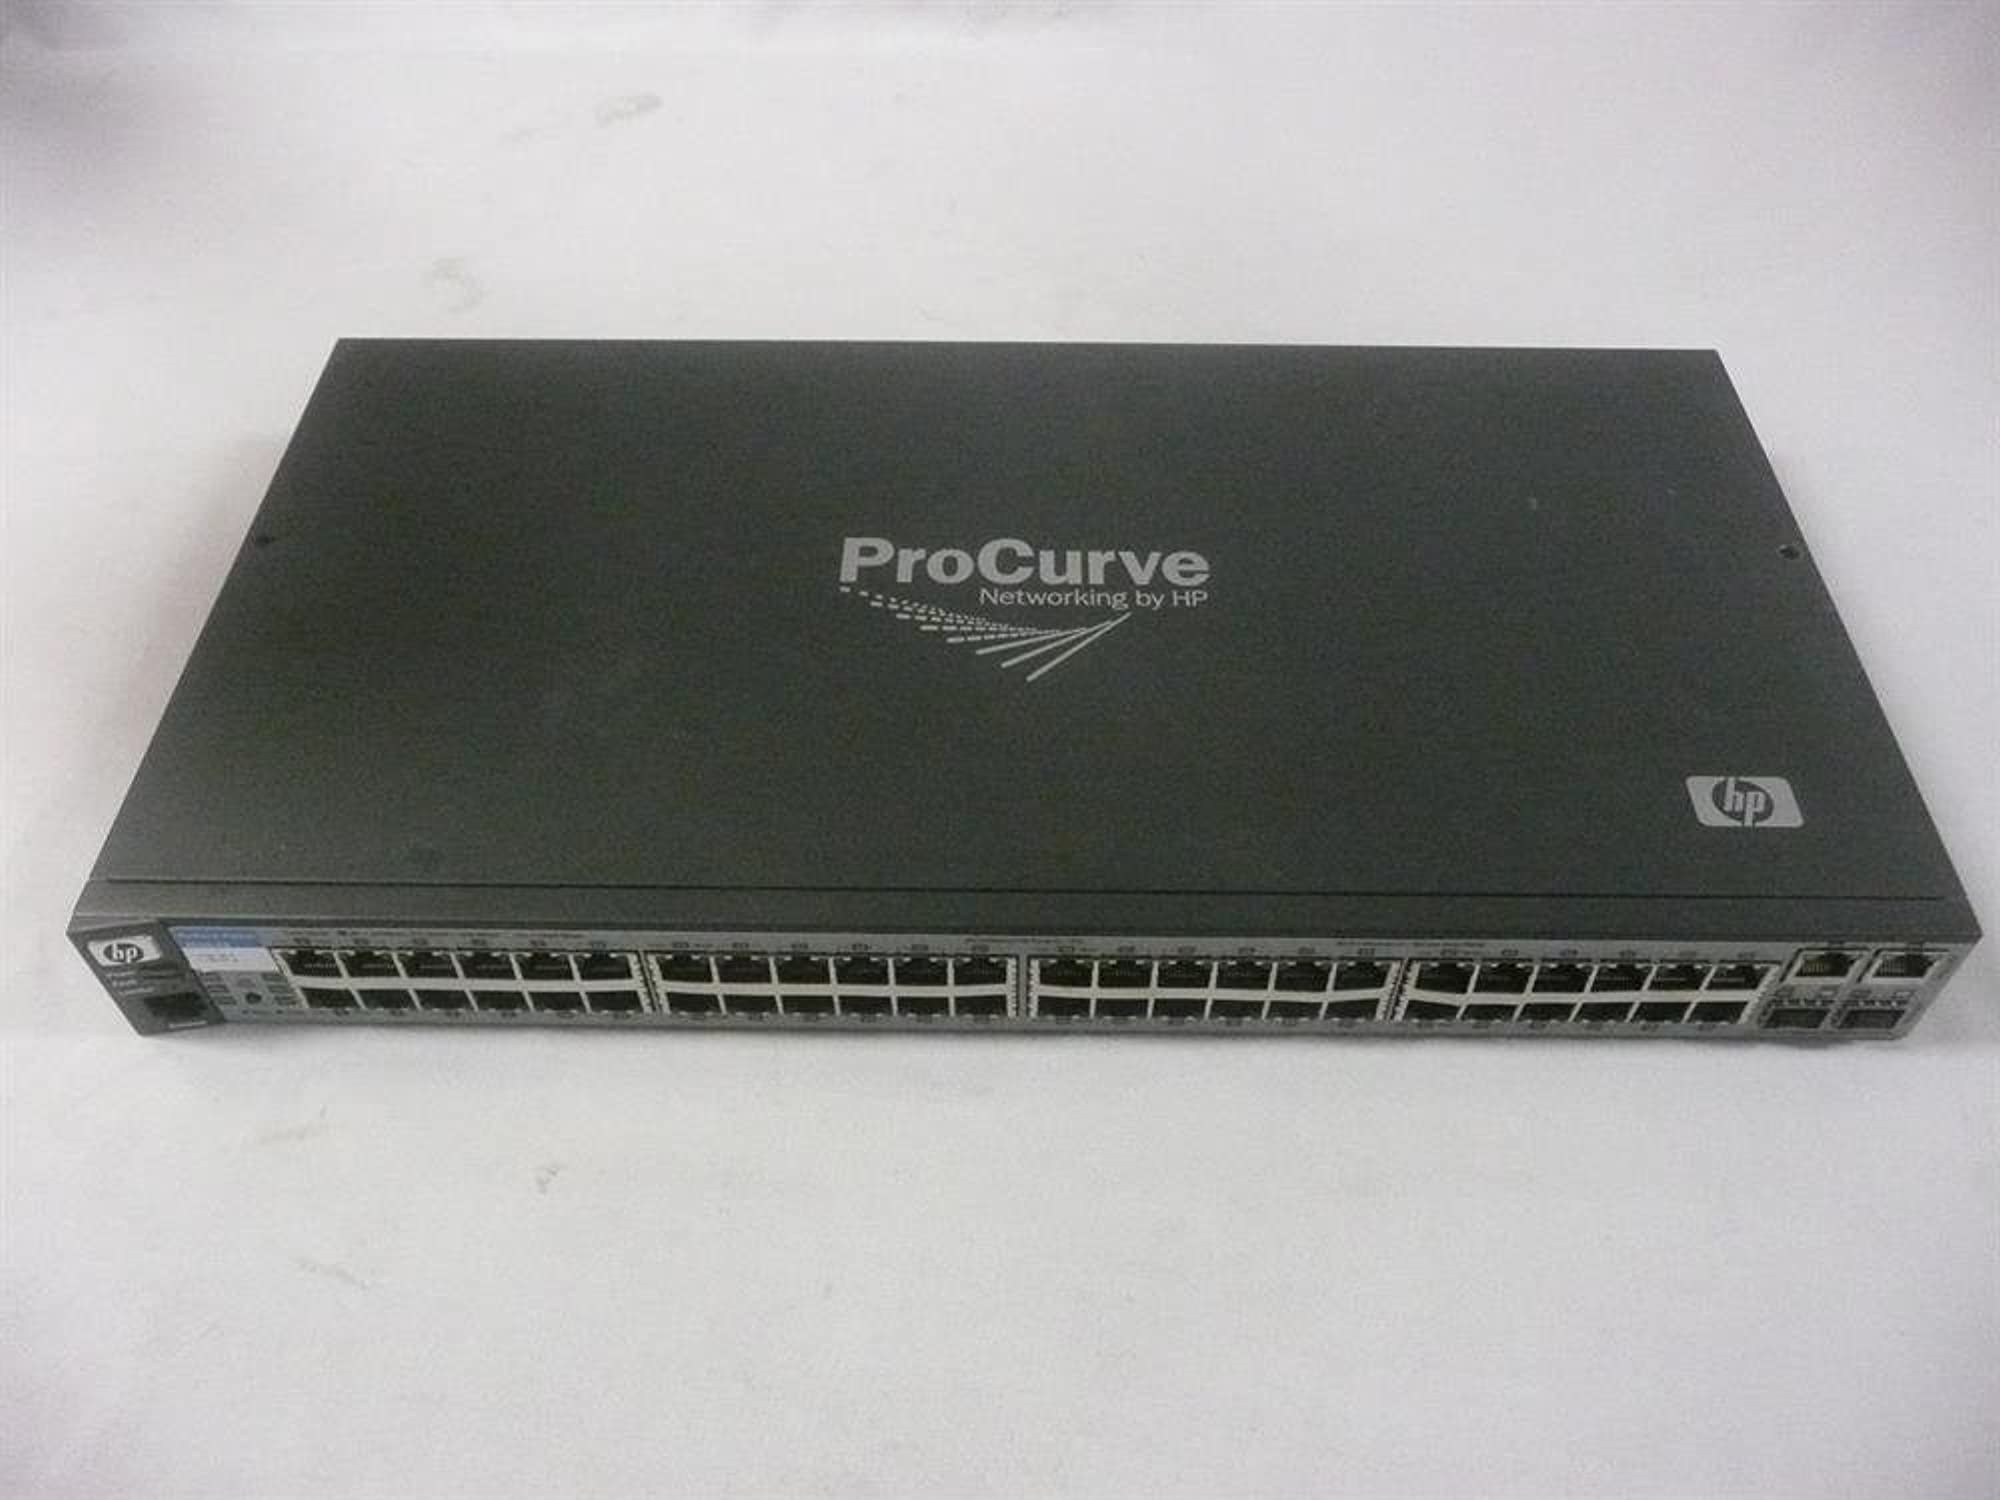 J9088A I HP ProCurve 2610-48 Layer 3 Switch 